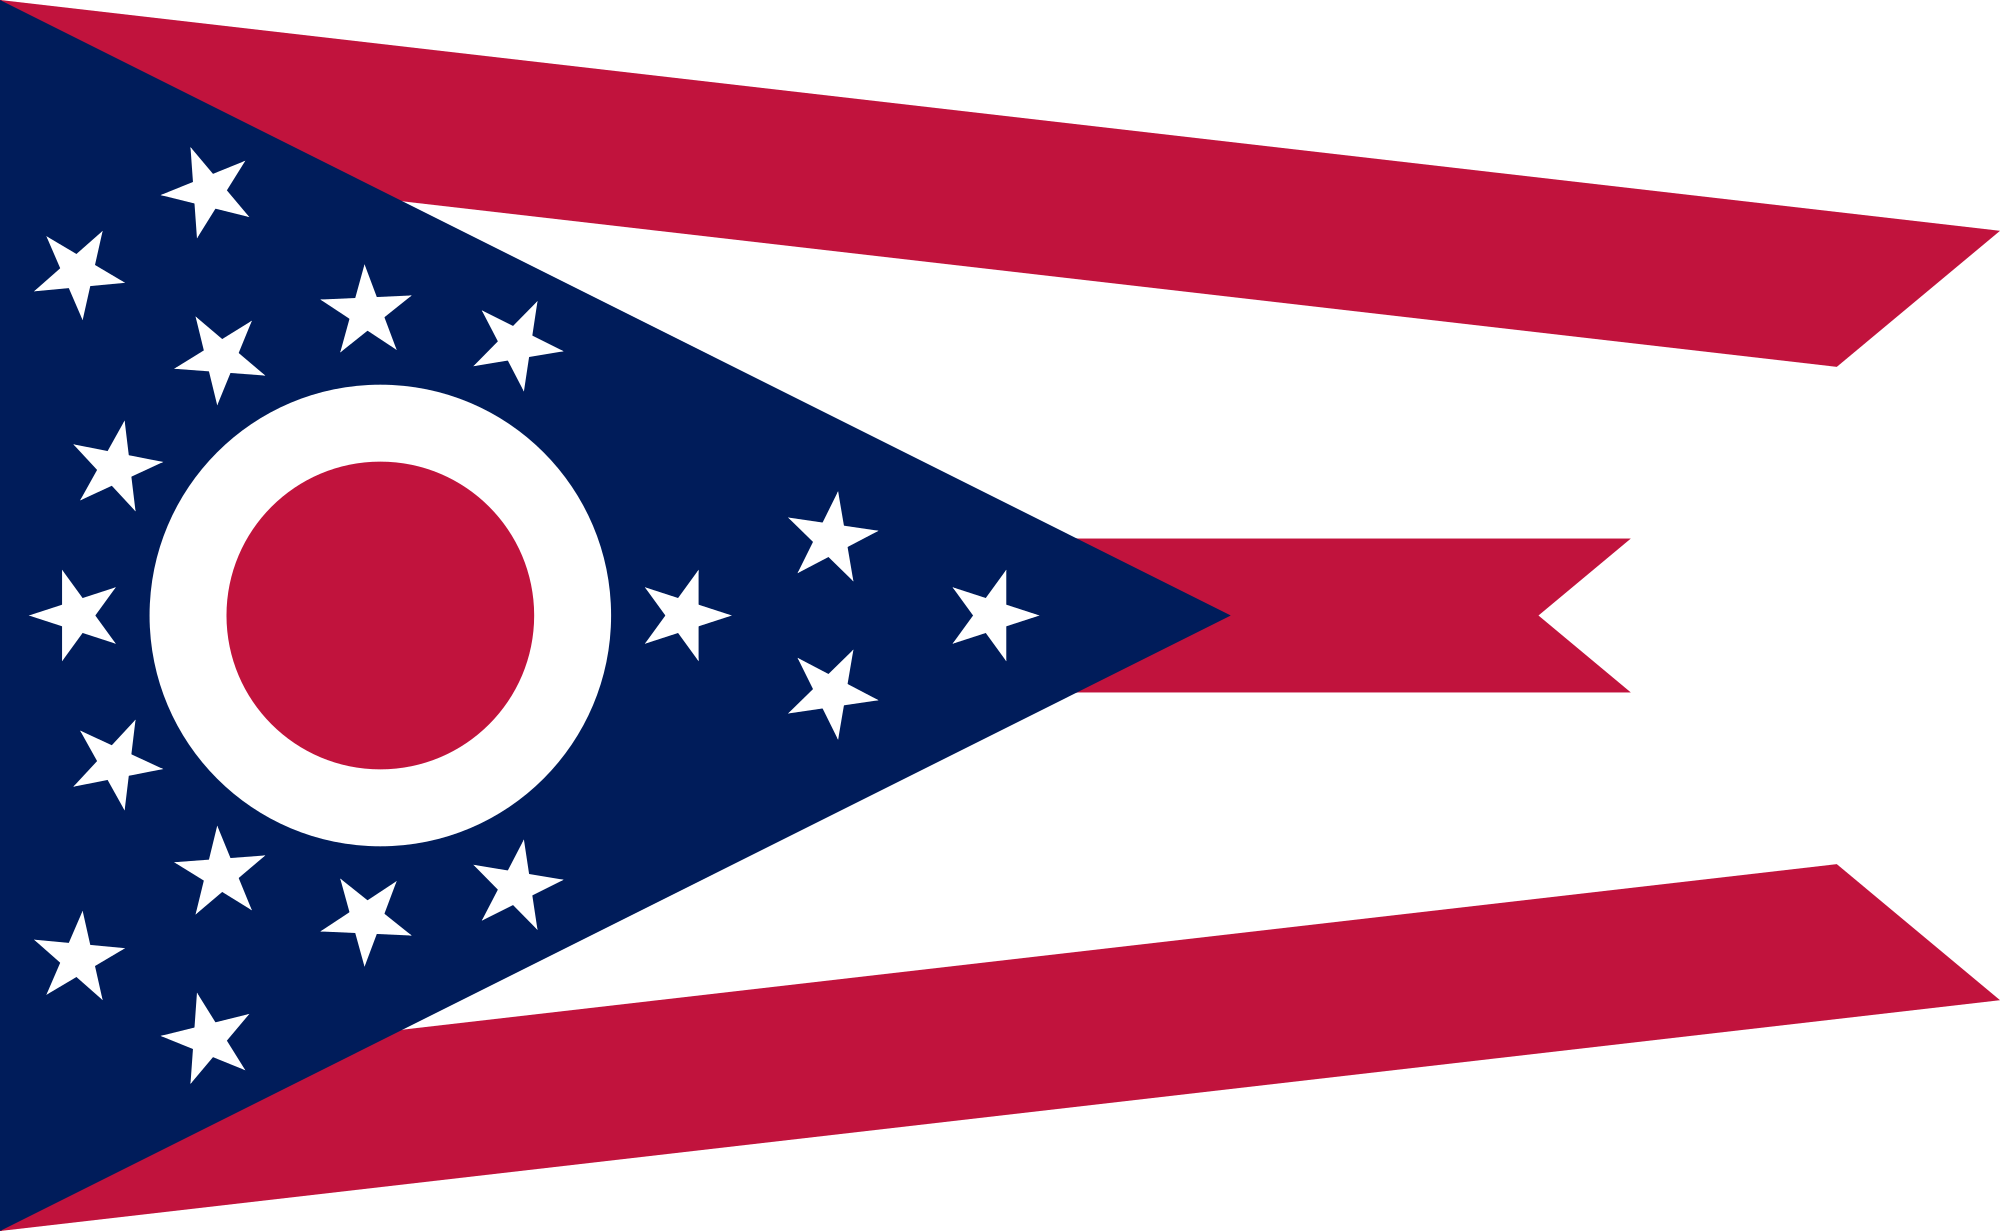 USA Red White Blue Triangle Logo - Flag of Ohio